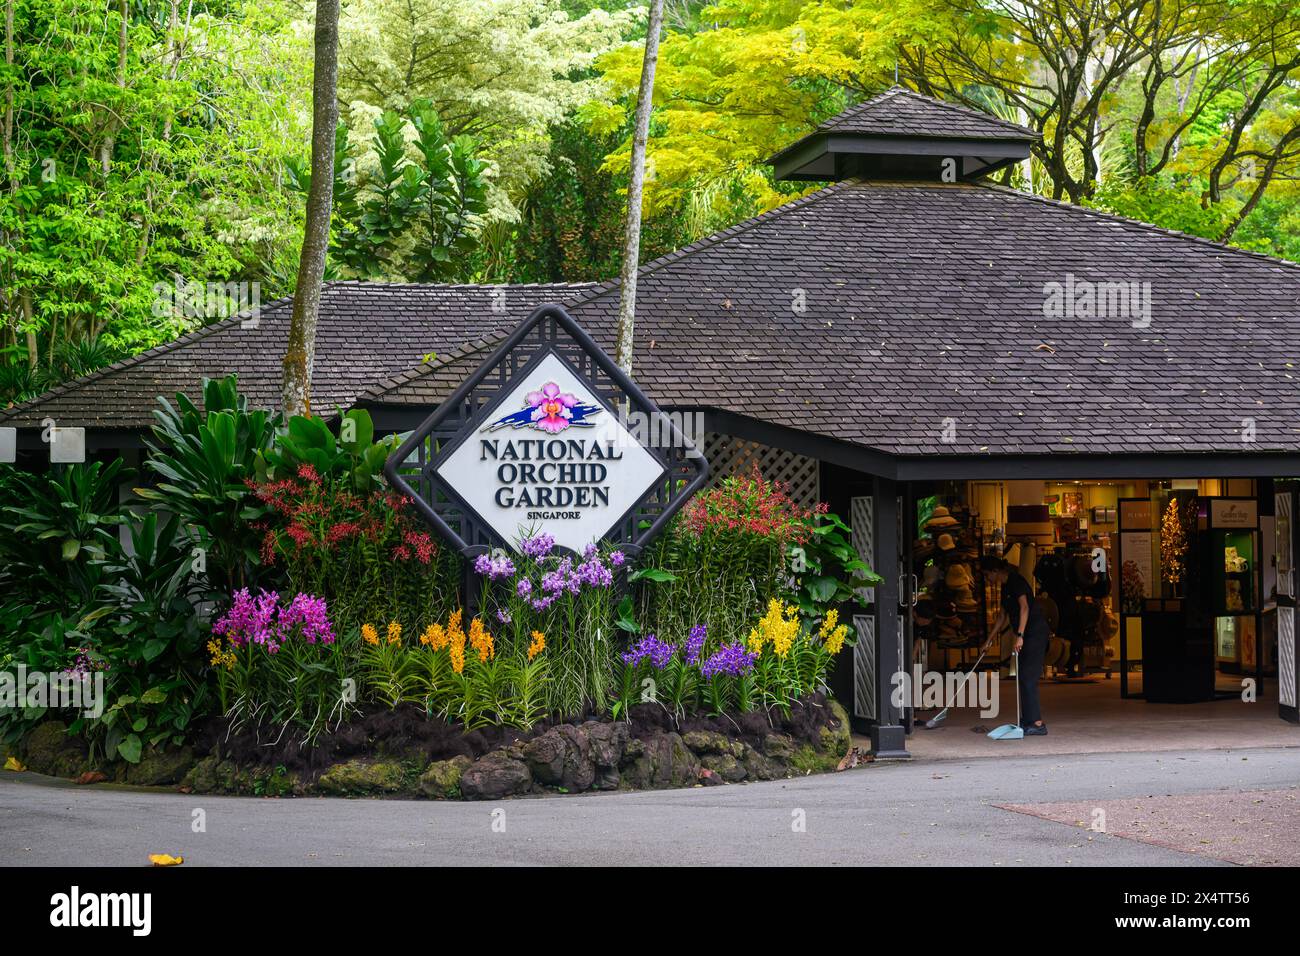 The National Orchid Garden Entrance, Singapore Botanic Gardens, Singapore Stock Photo